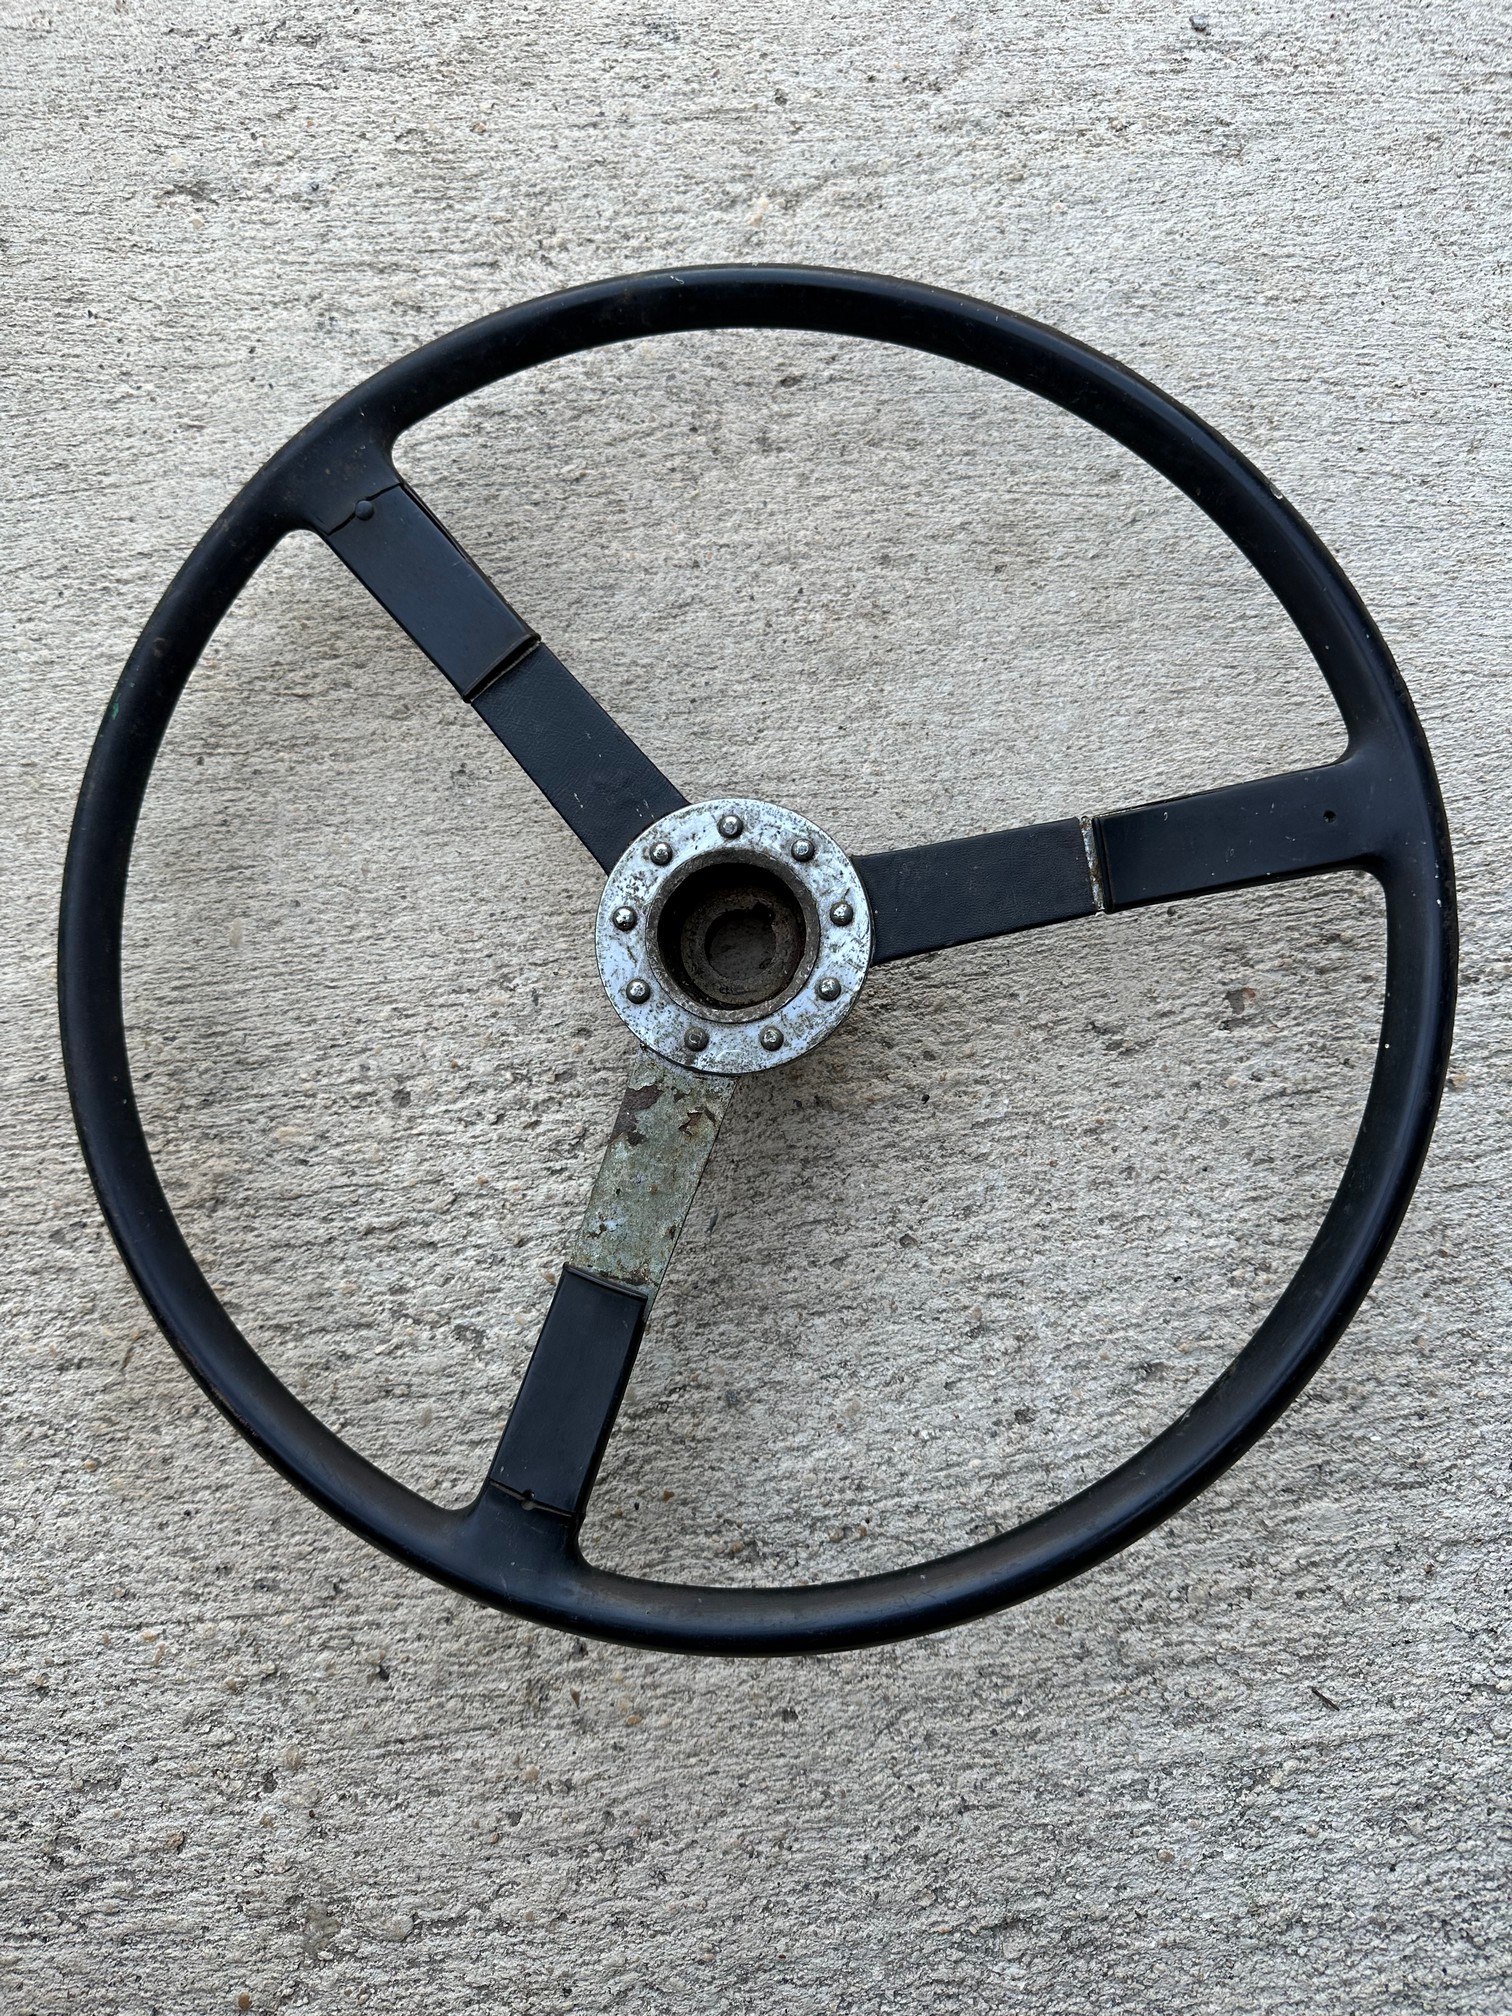 A circa 1950 three spoke steering wheel.